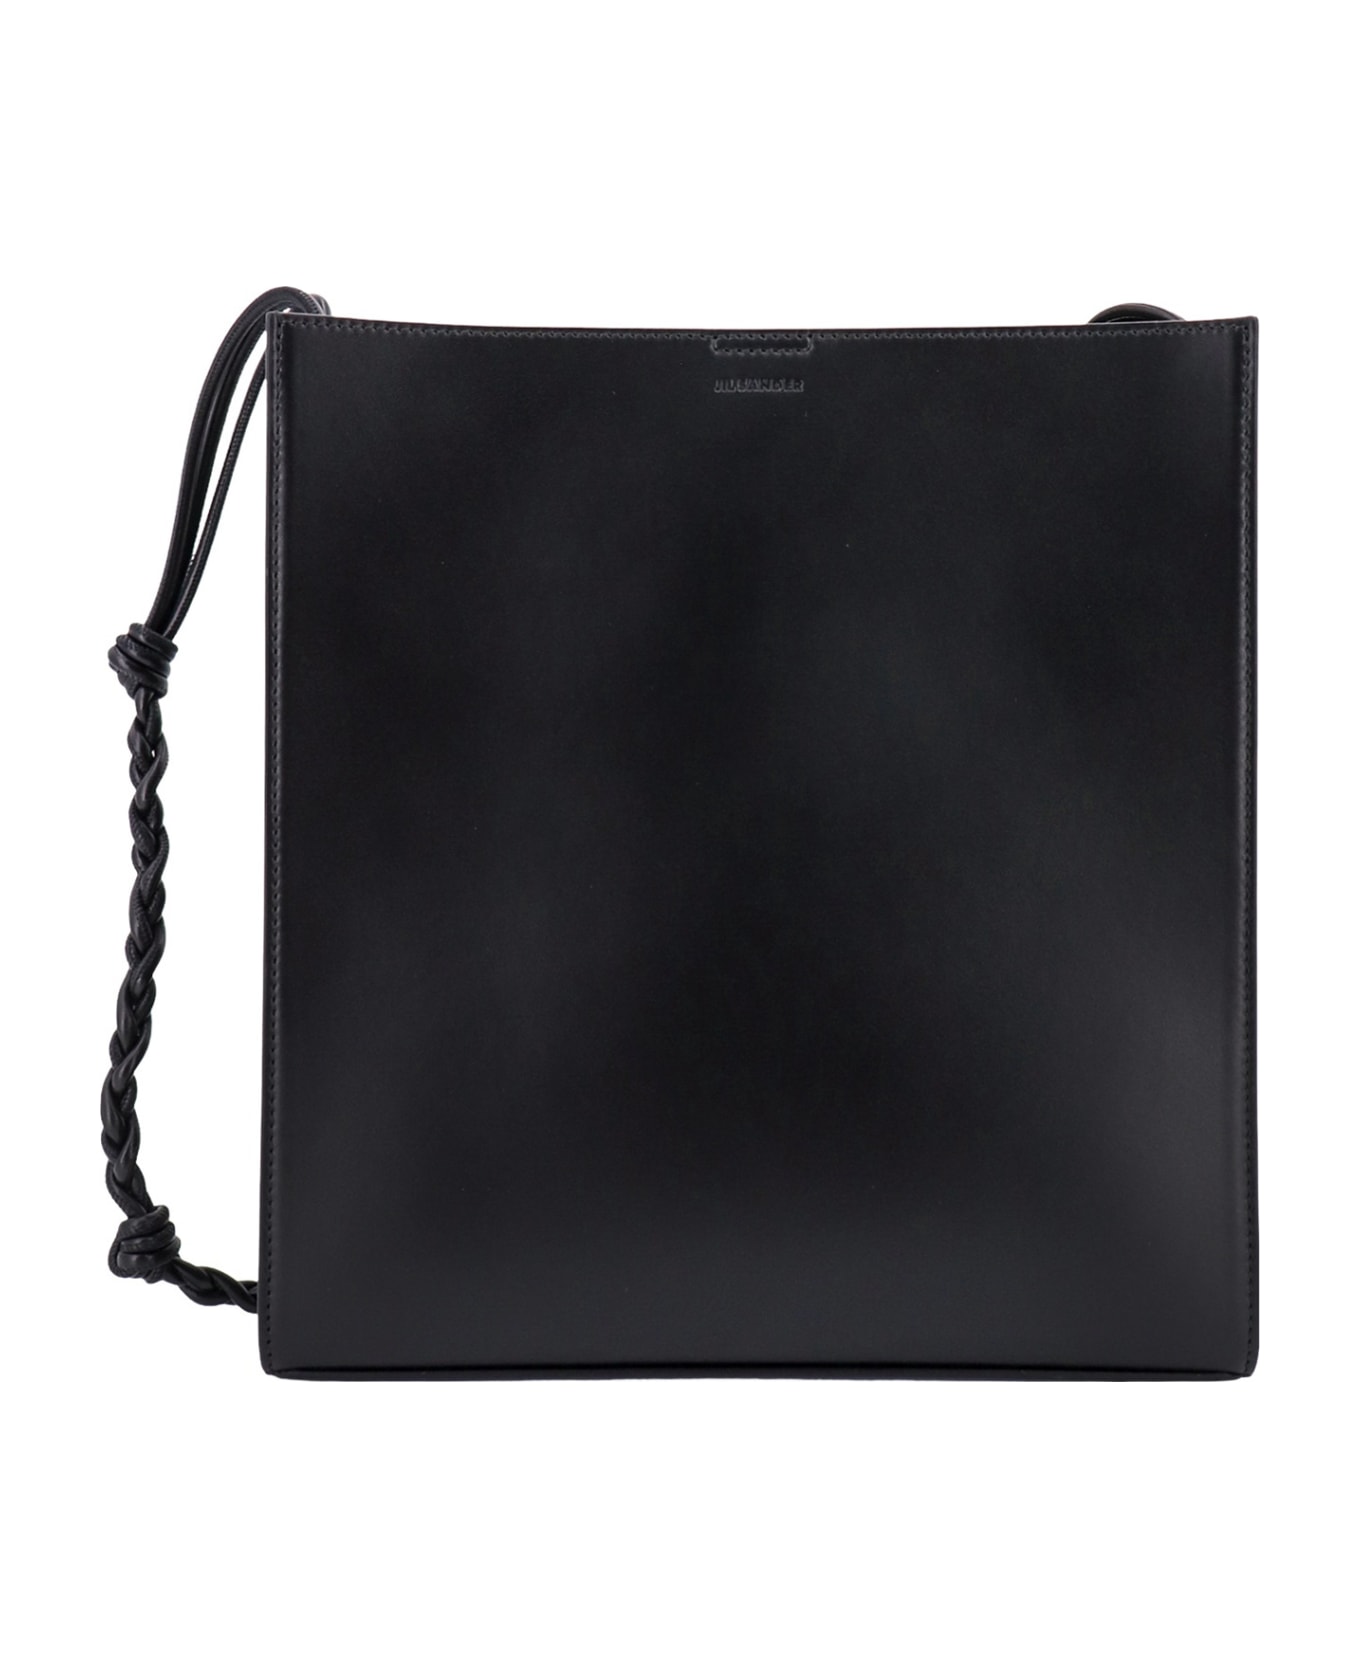 Jil Sander Medium Tangle Bag In Black Leather - 001 ショルダーバッグ